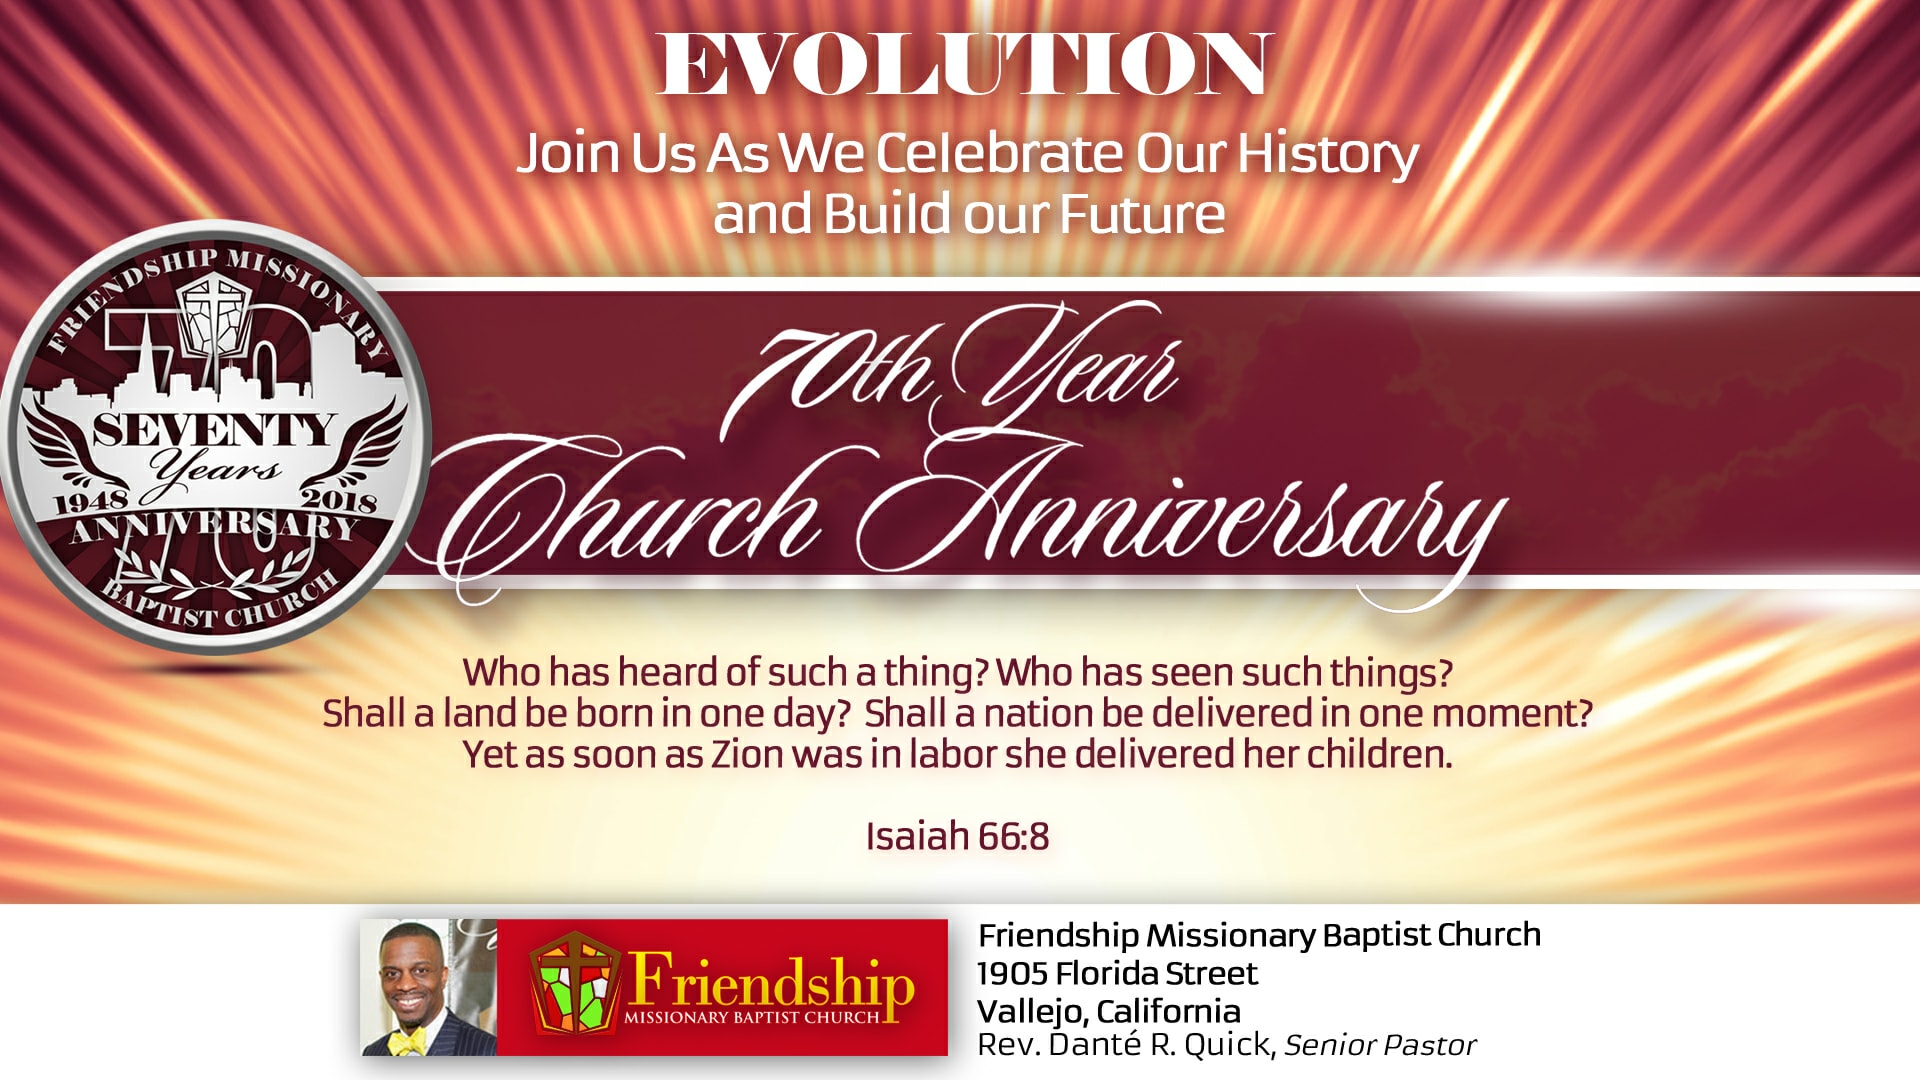 Friendship Missionary Baptist Church - 70th Anniversary Celebration Revival